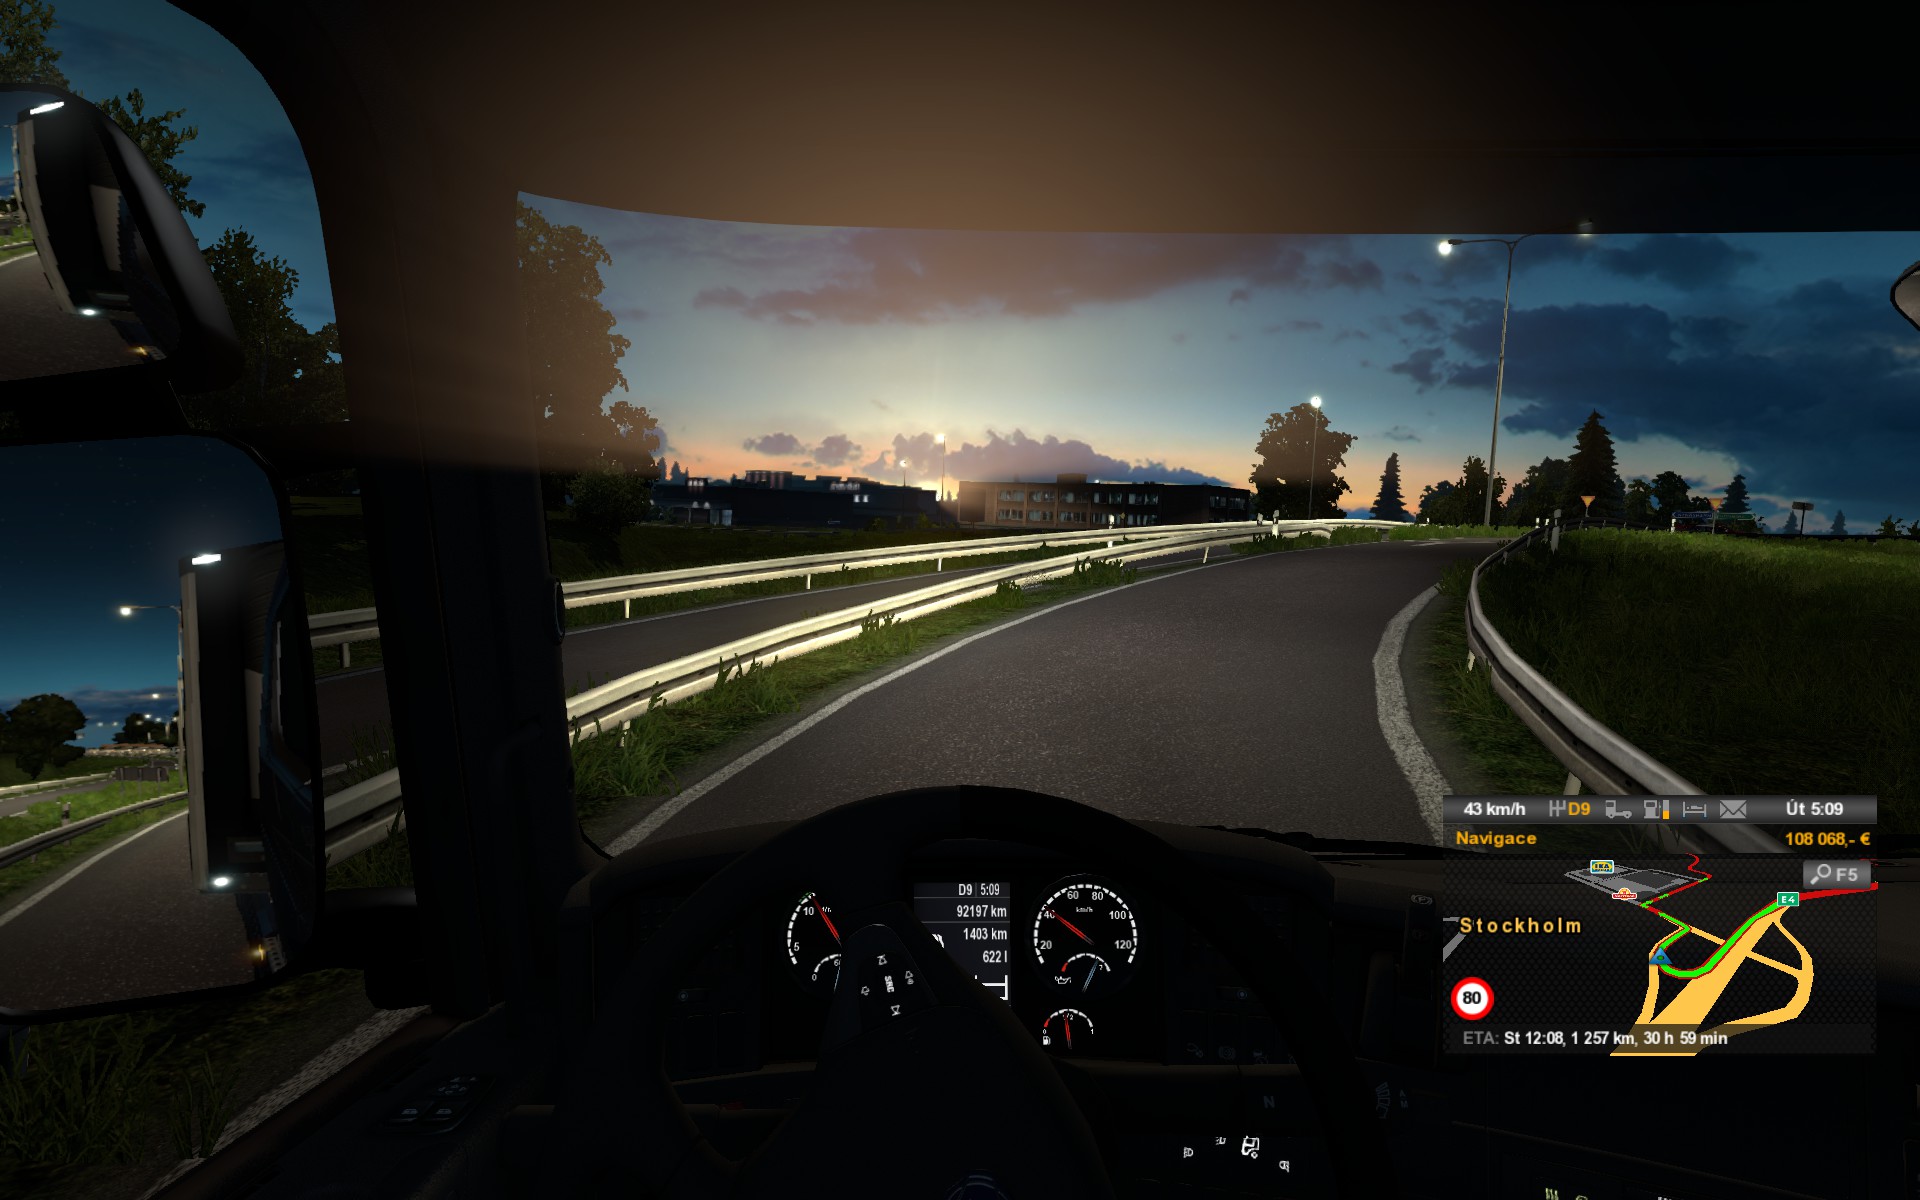 truck simulator pro 2 ios